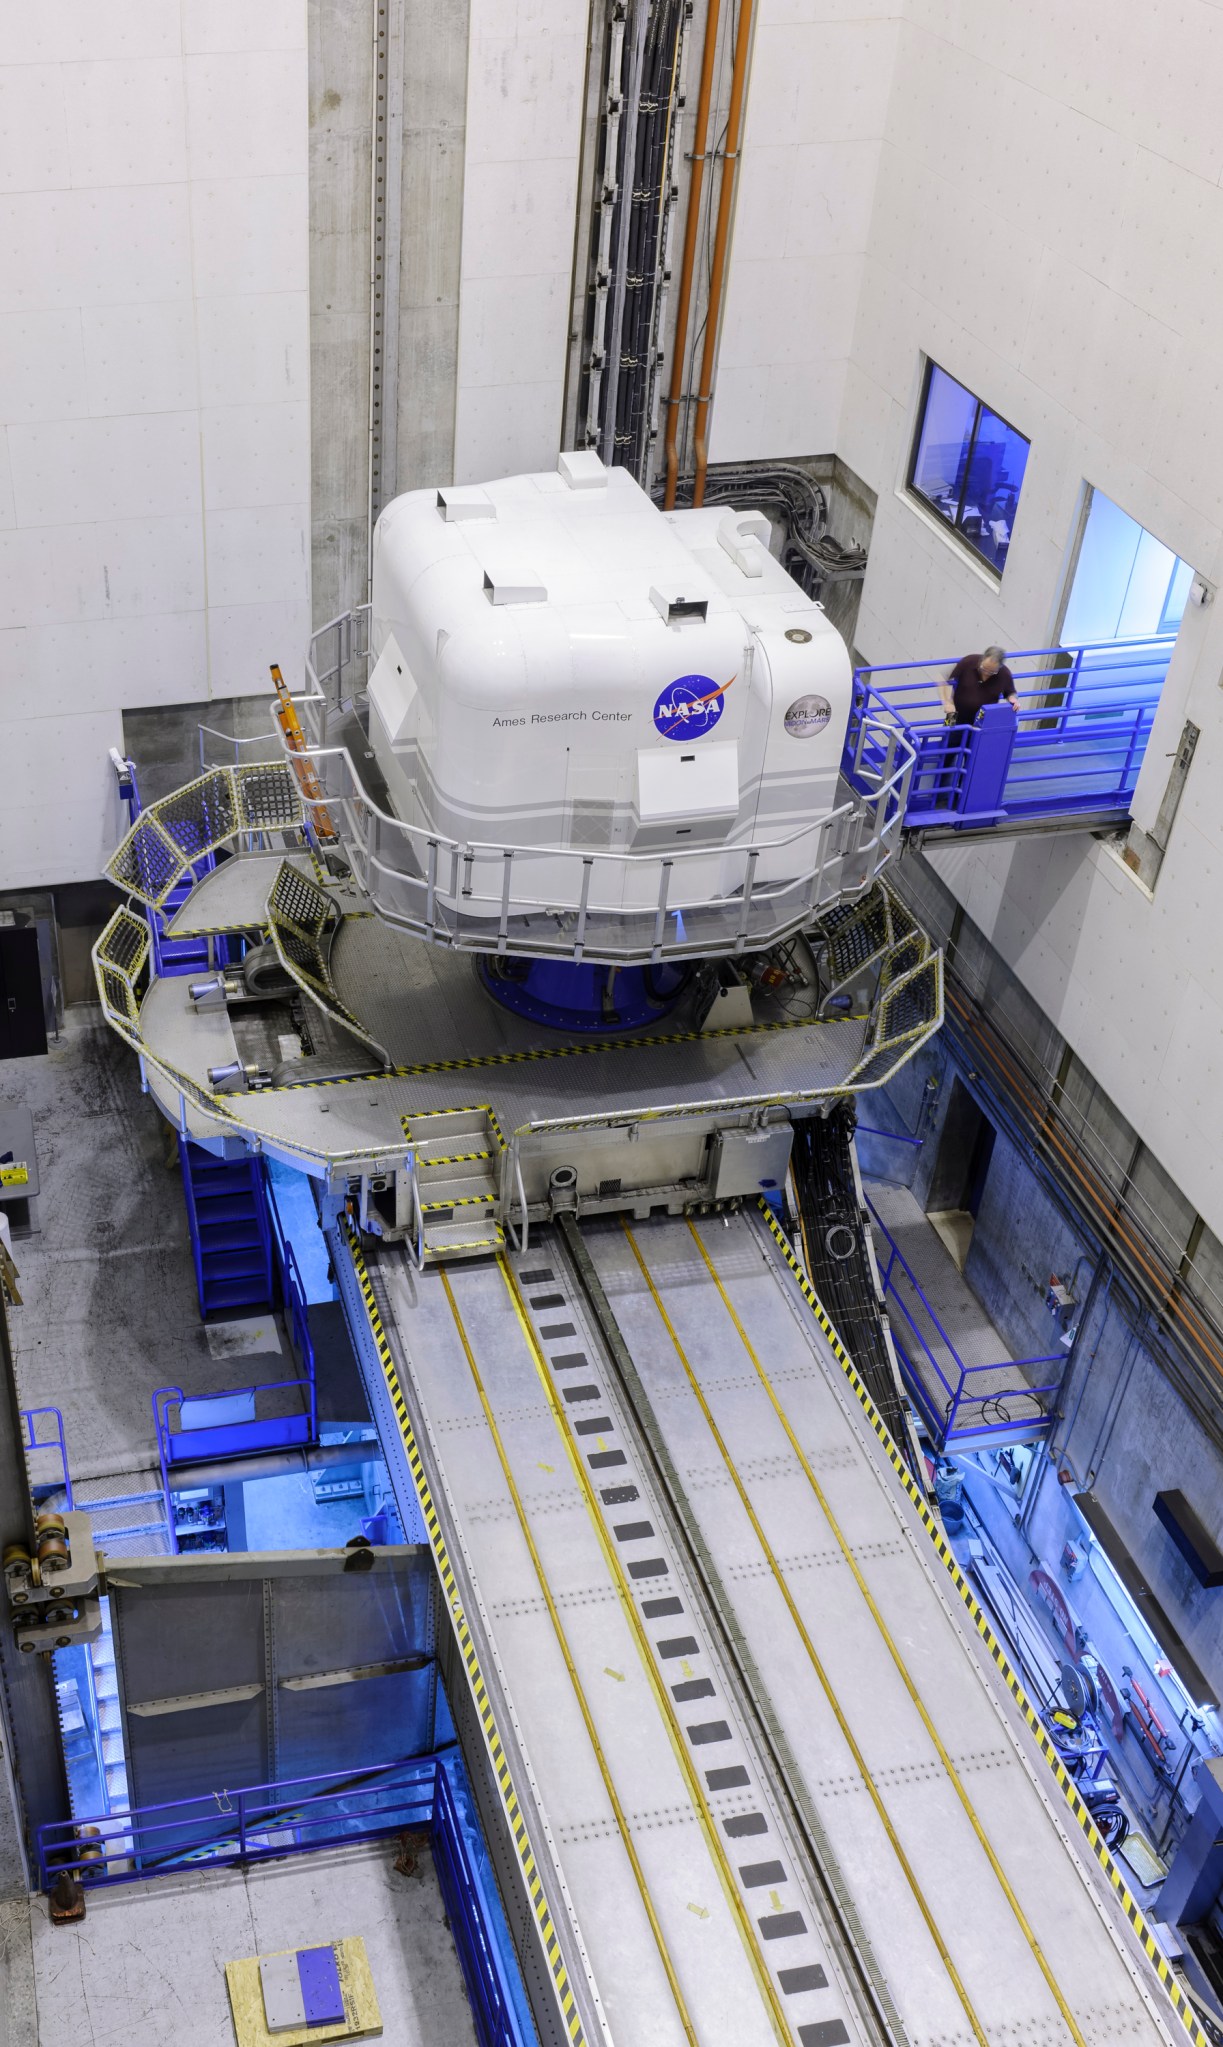 Vertical Motion Simulator (VMS) Lunar Lander configuration. Exterior of the Lunar Lander "Explore Moon to Mars" Cab.